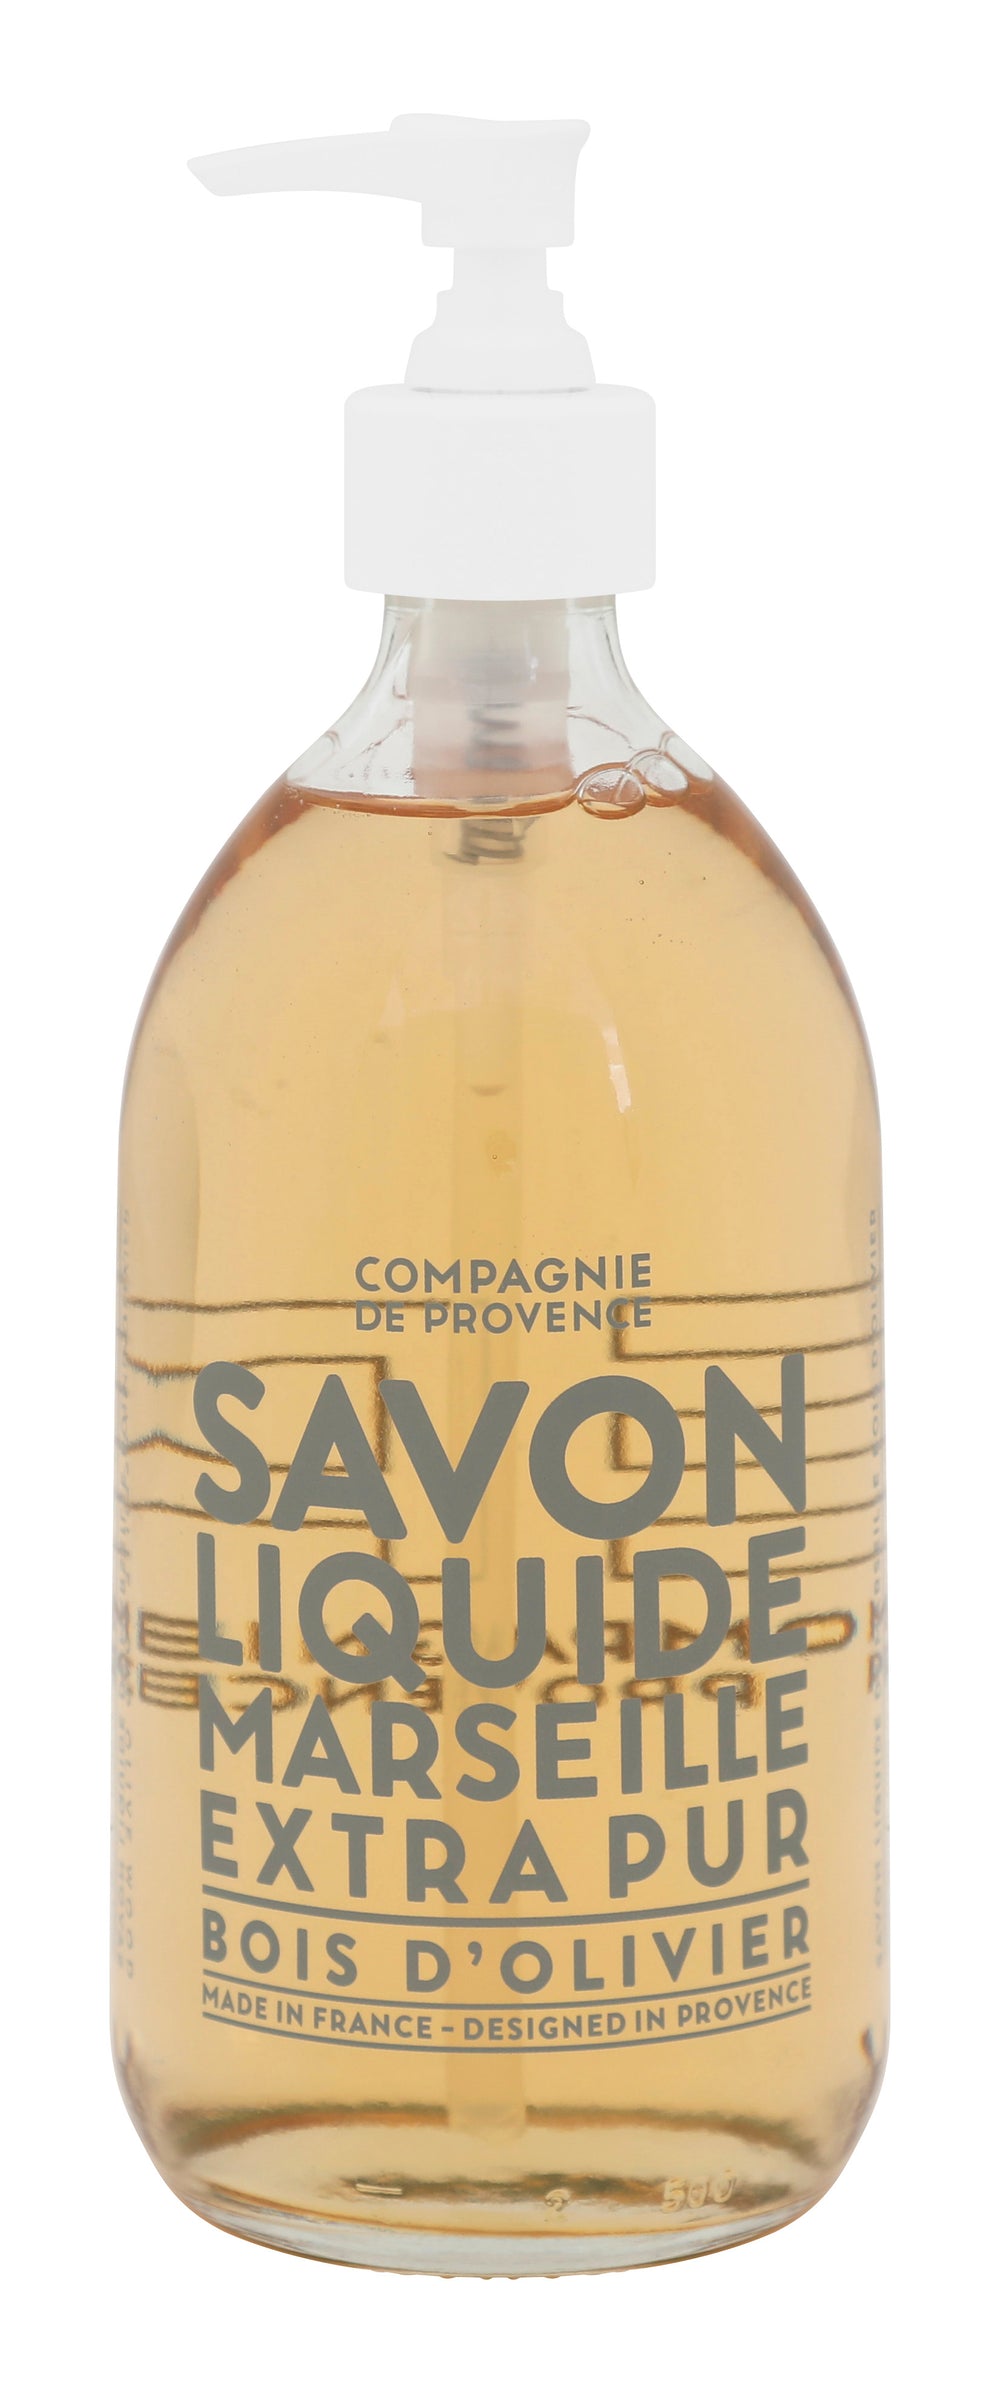 Compagnie De Provence Liquid Soaps